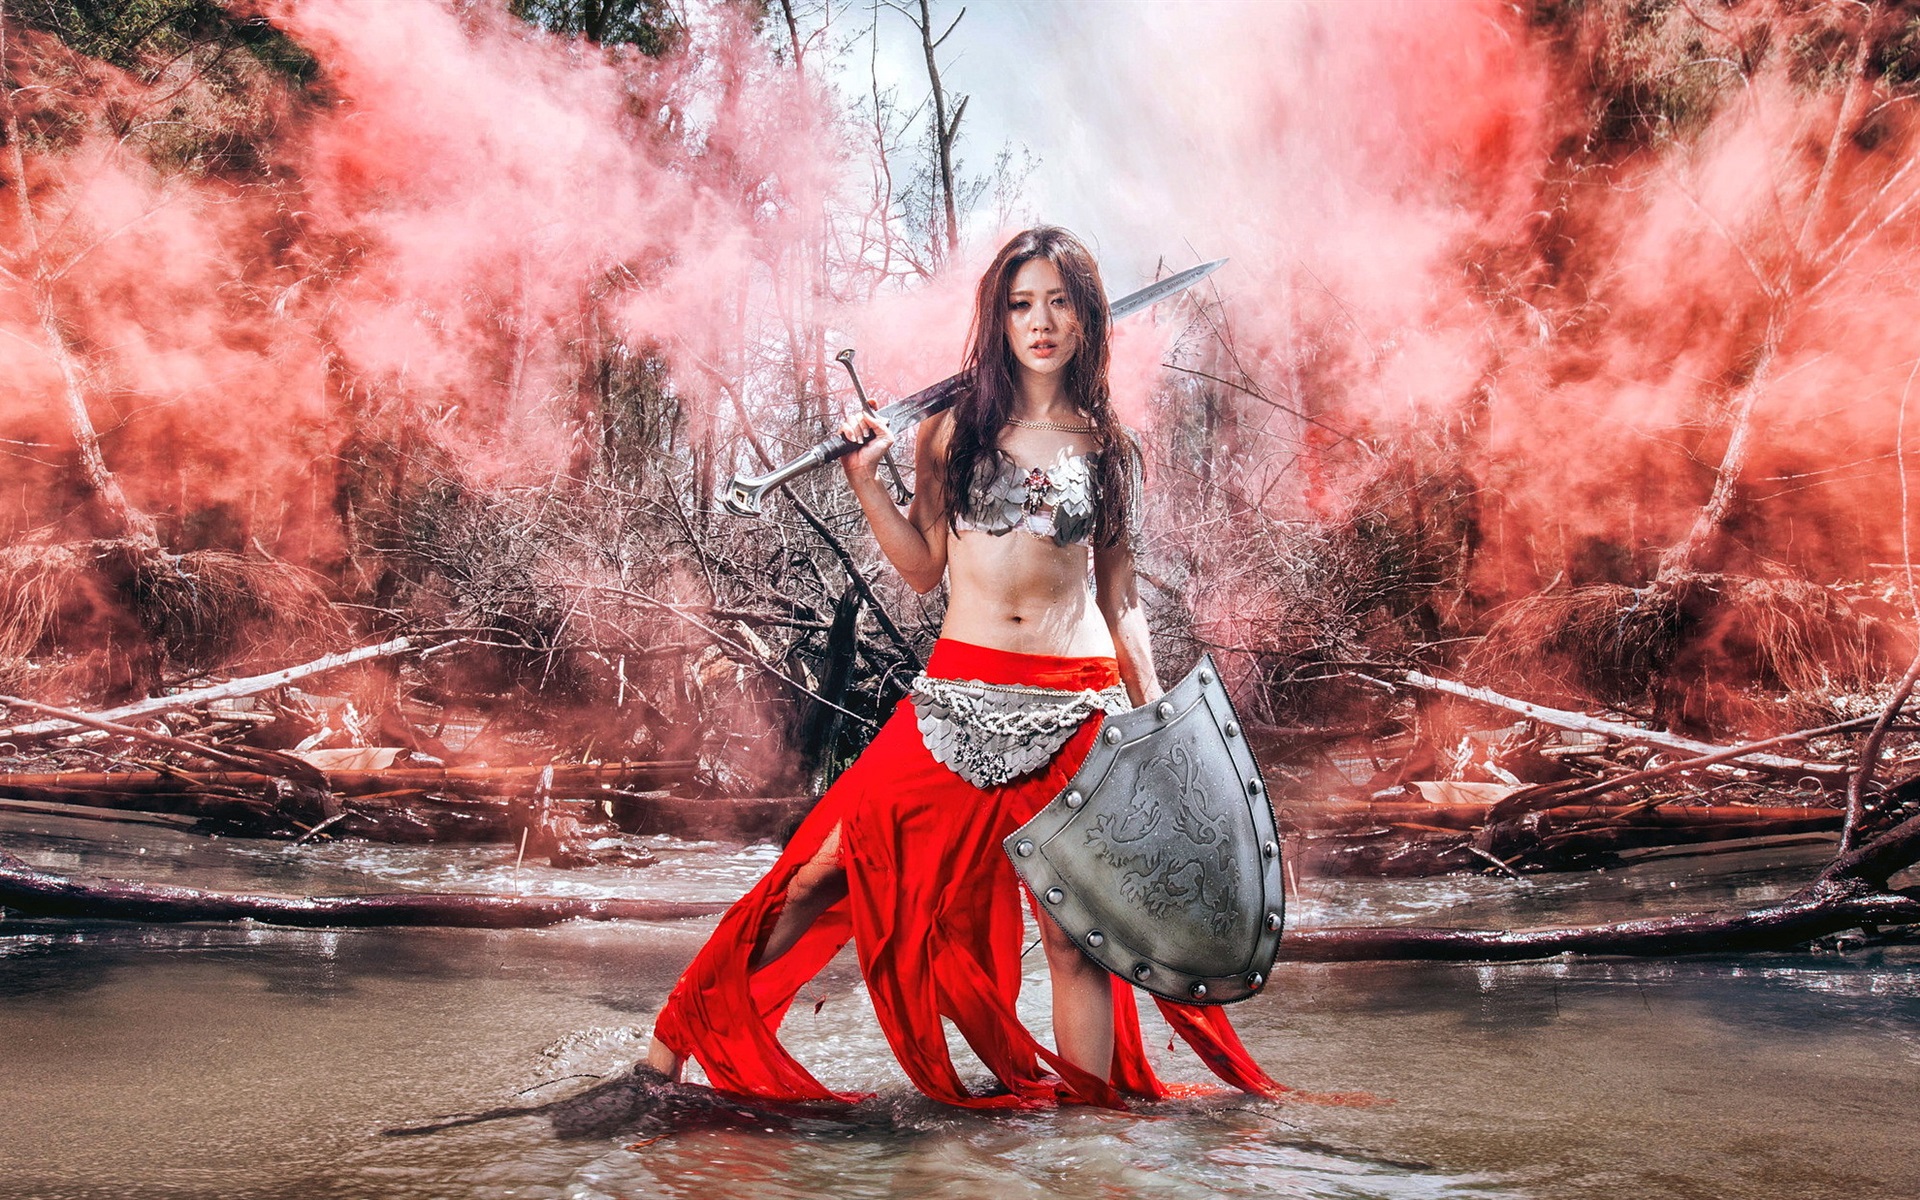 warrior-girl-asian-red-dress-sword-water-retro-style_1920x1200.jpg